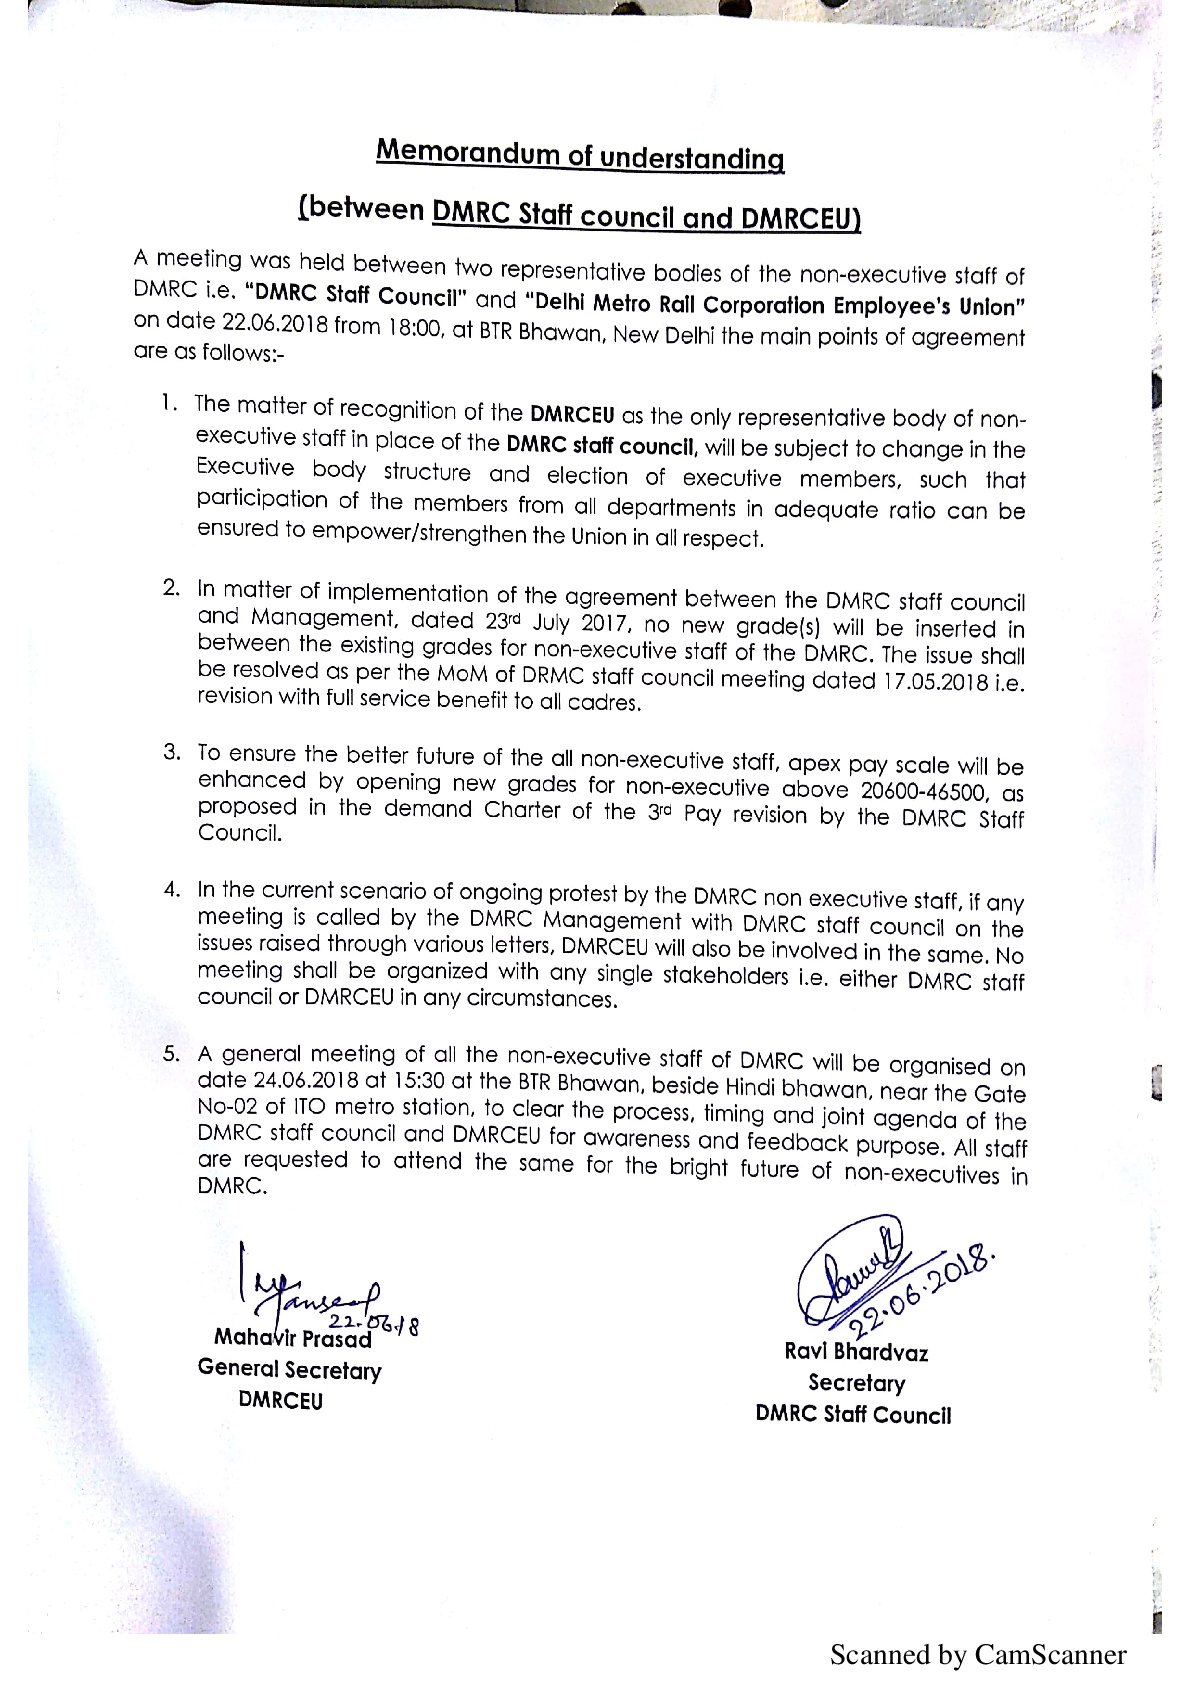 Memorandum of understanding signed between Staff Council and DMRC Employees Union 